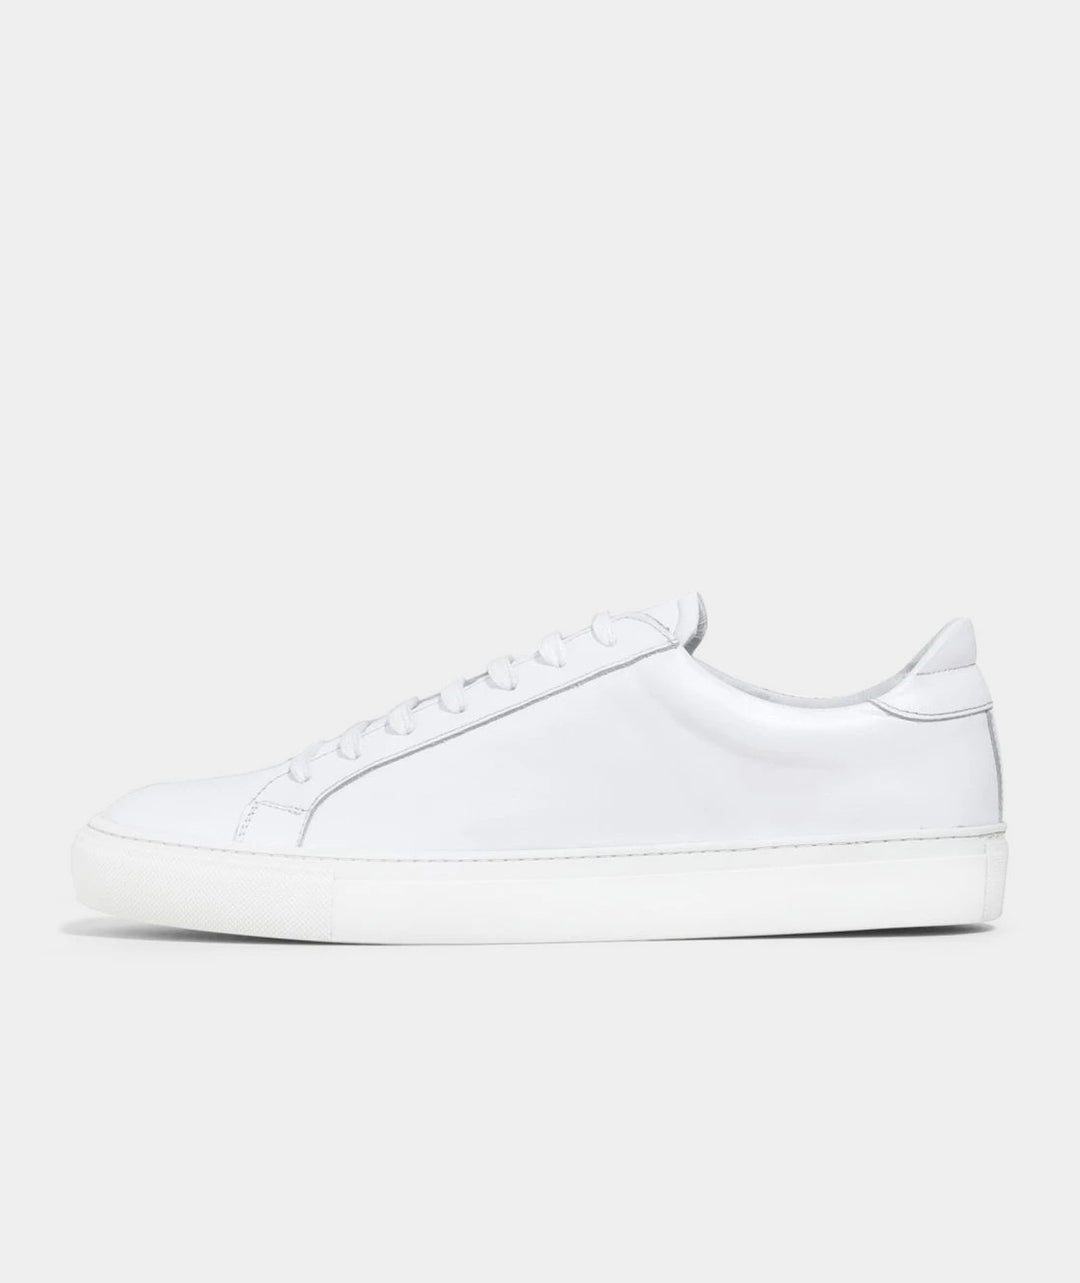 Type Sneaker - White Leather